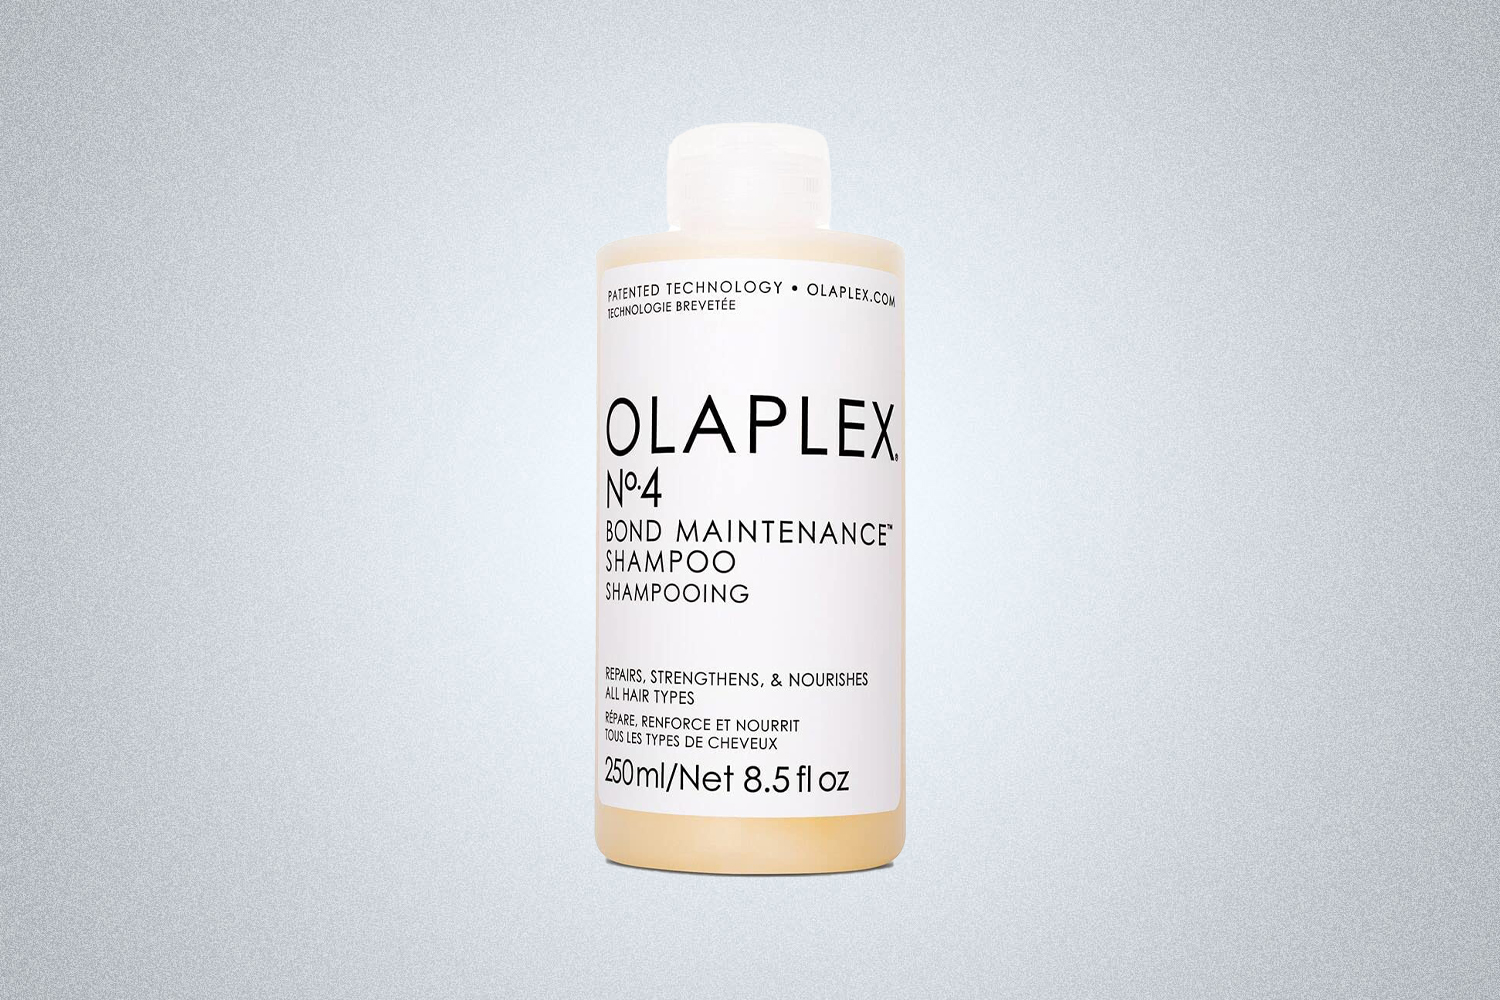 Olaplex No.4 Bond Maintenance Shampoo